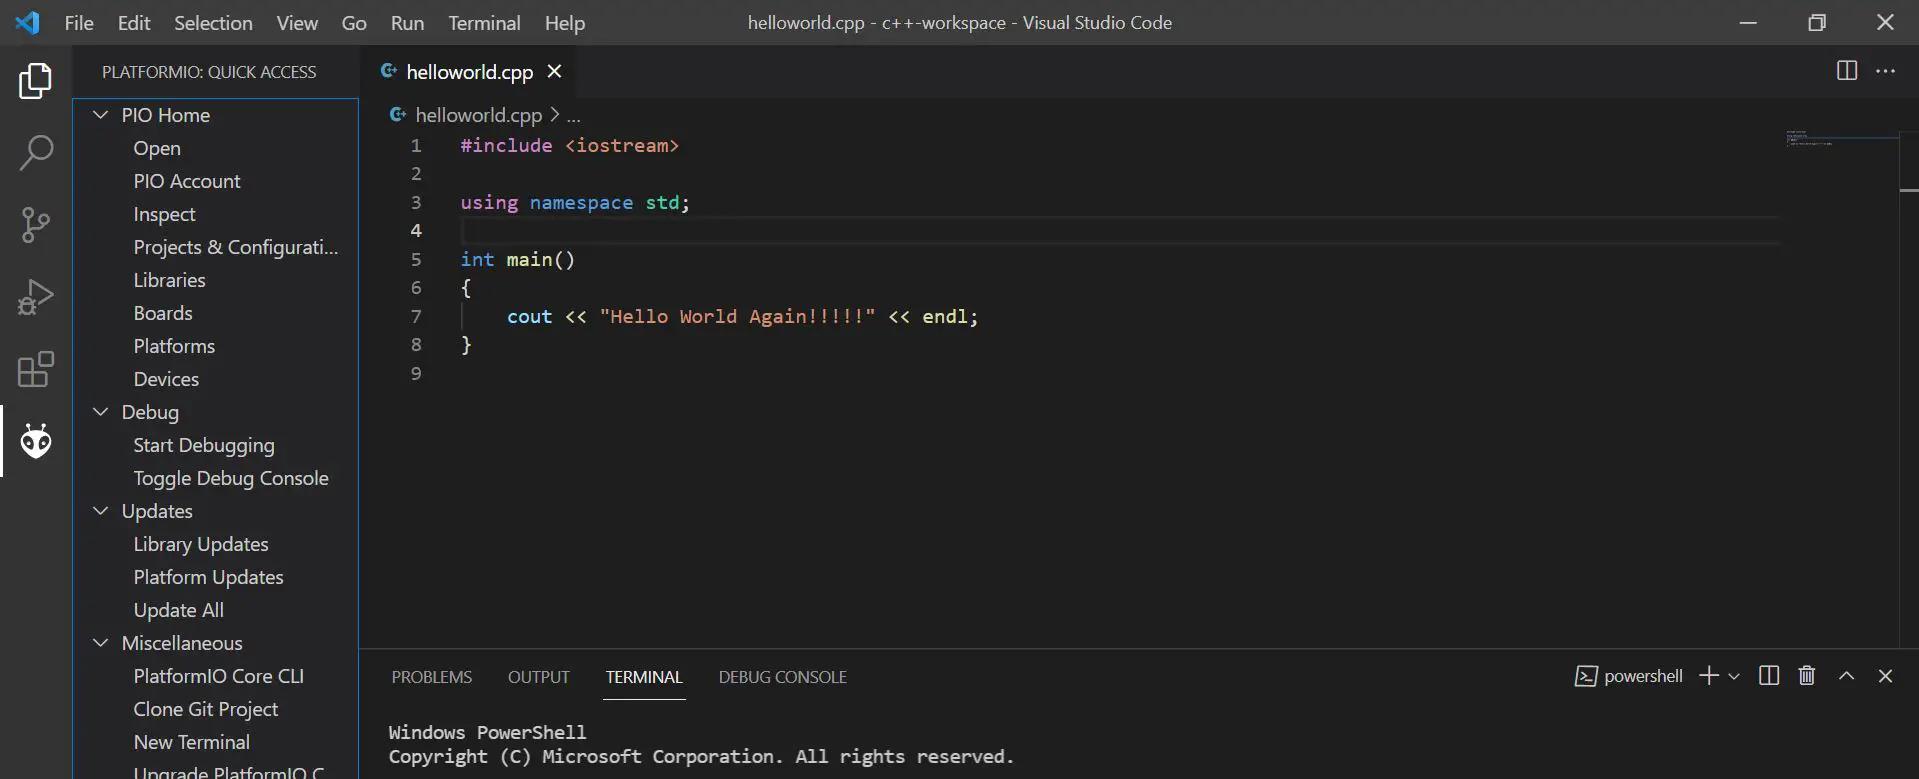 Install Visual Studio Code or VSCode in Windows